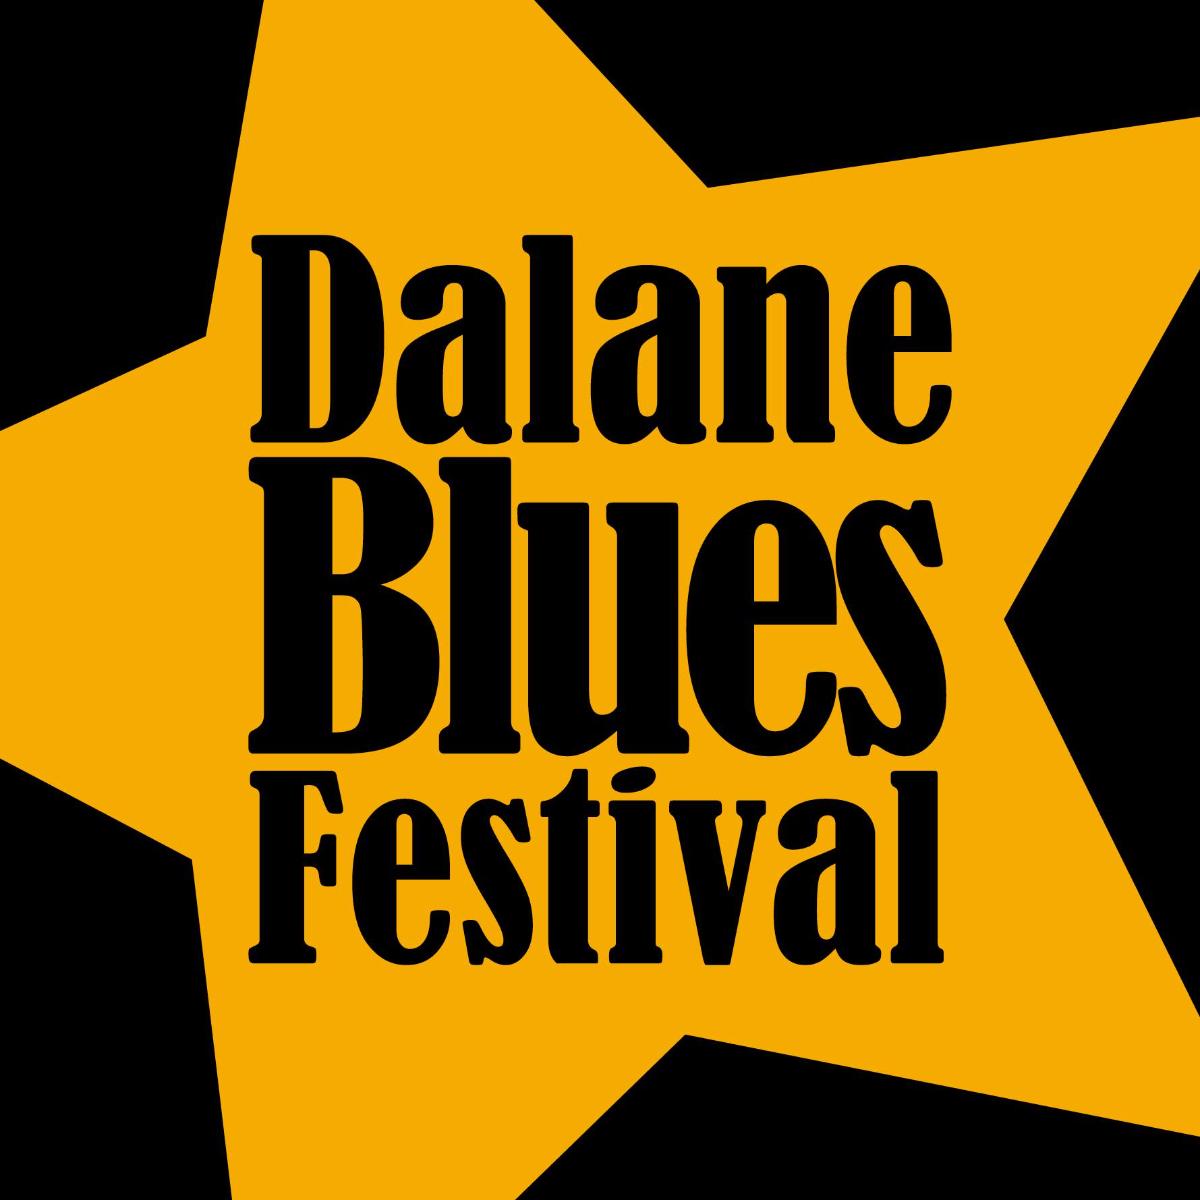 Dalane Blues Festival - Festival Lineup, Dates and Location | Viberate.com